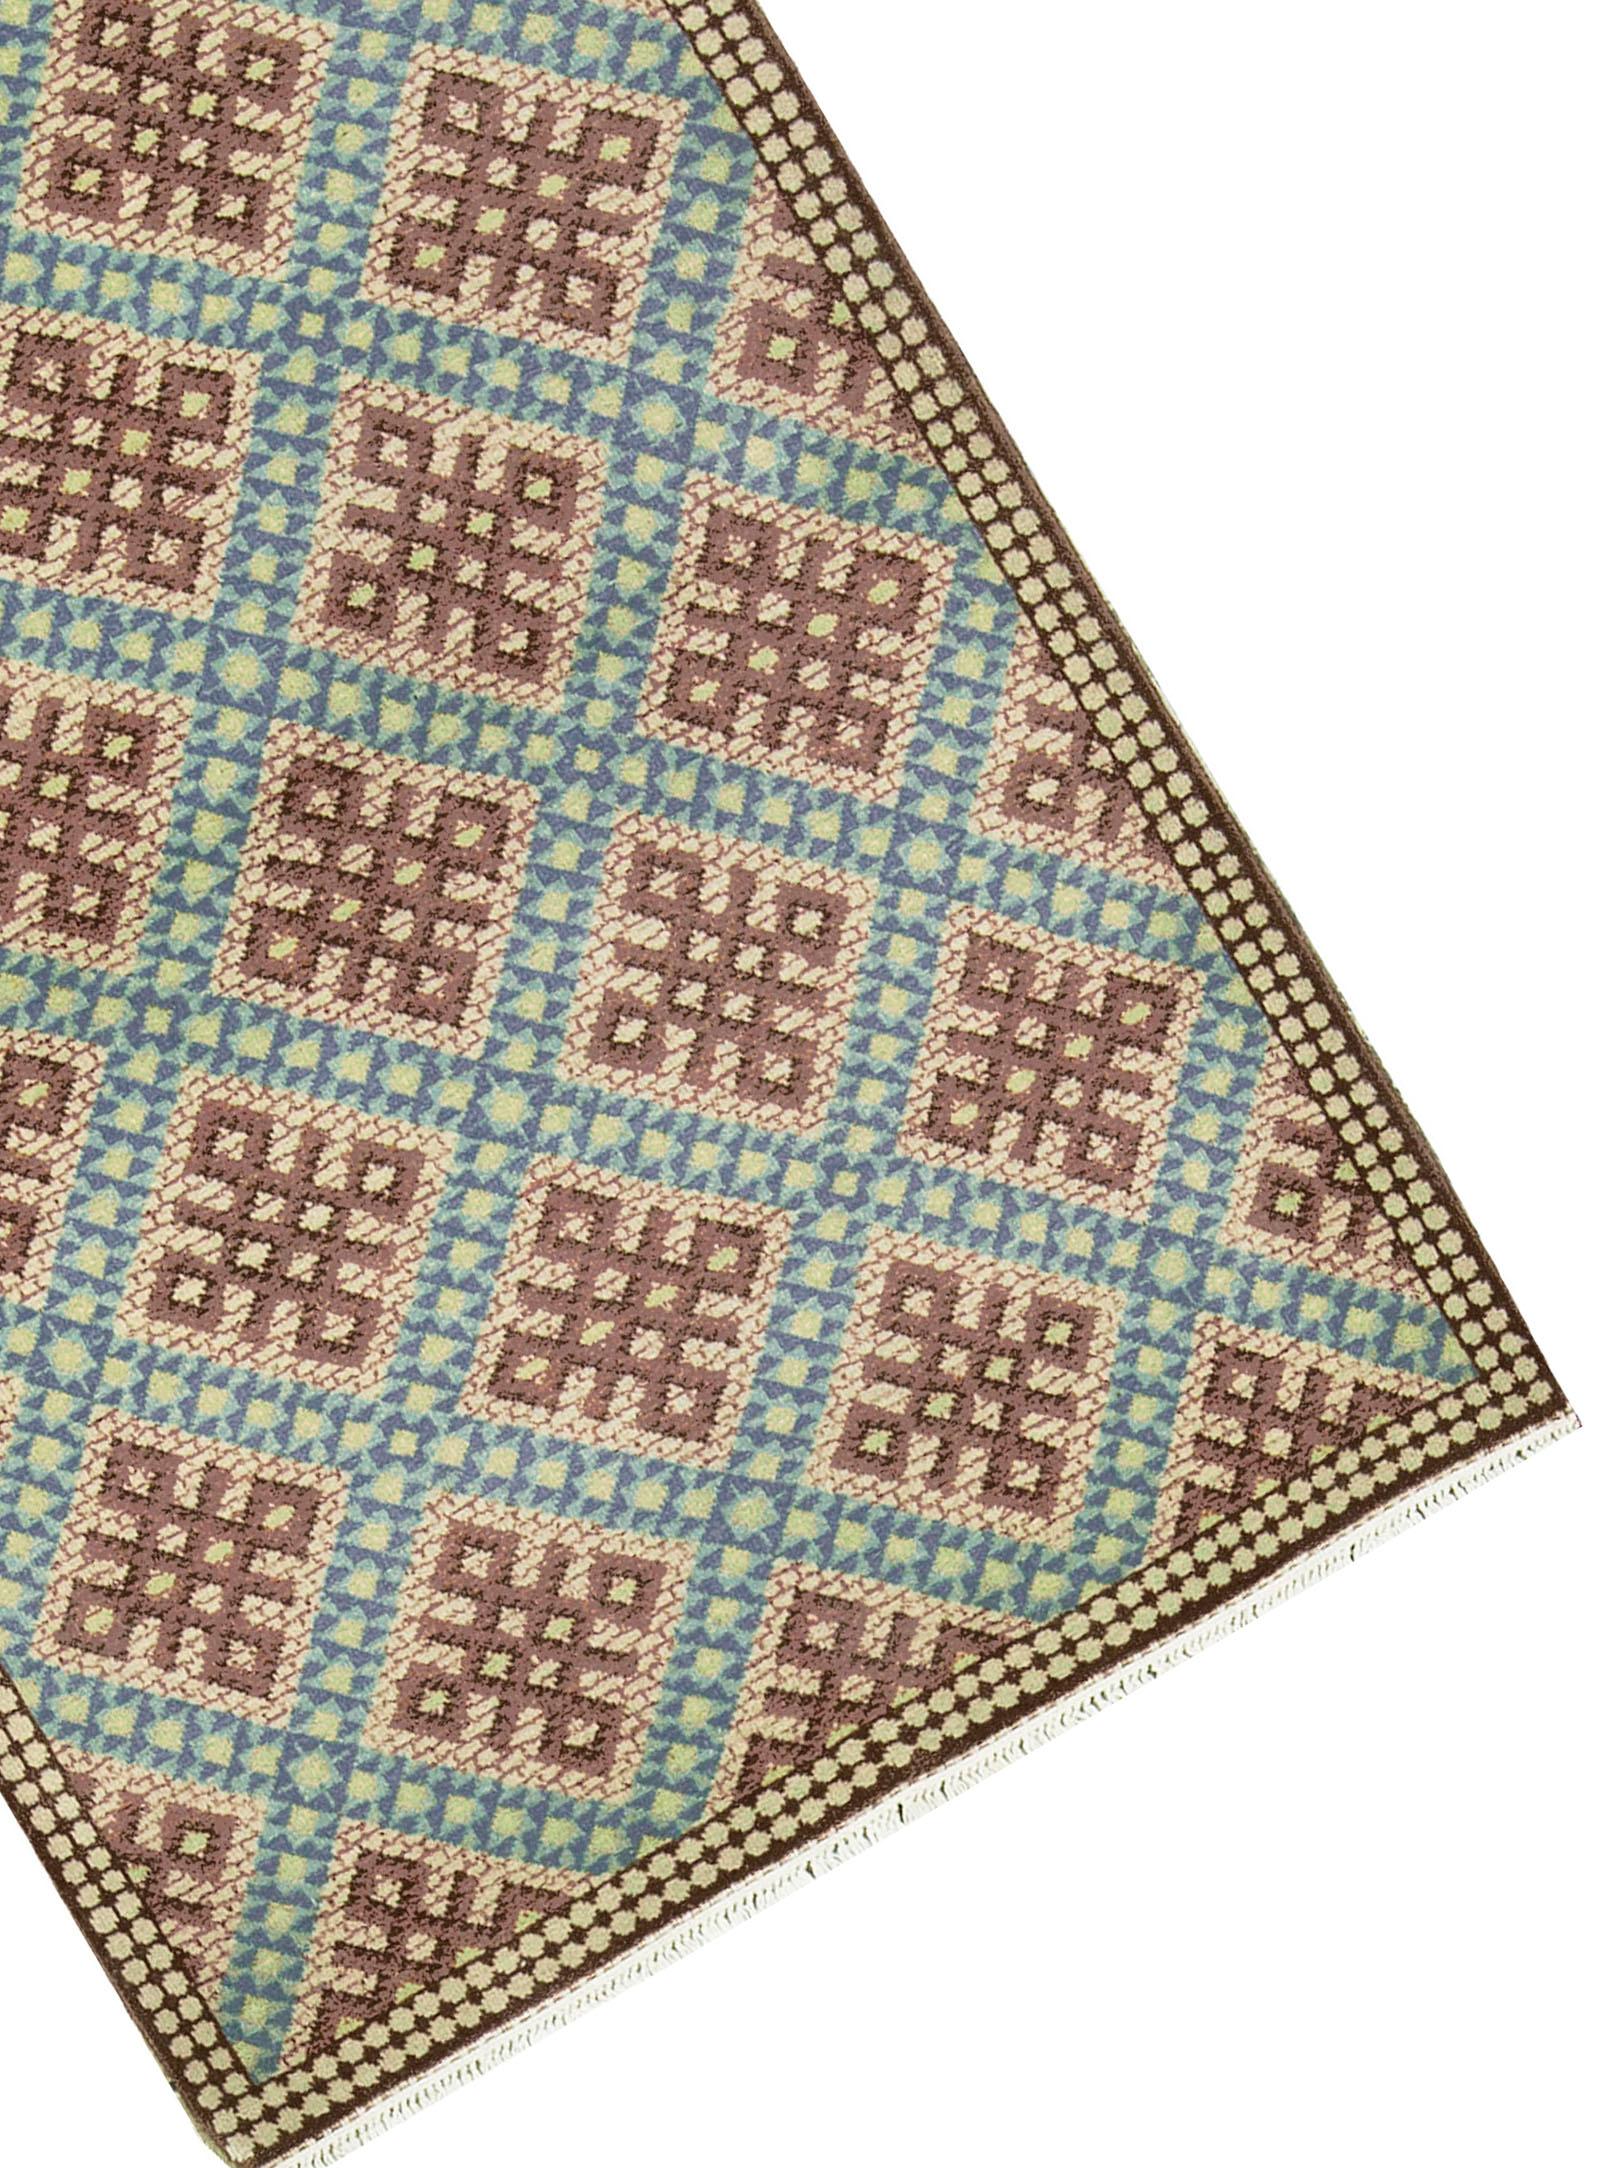 Hand-Knotted Vintage European Rug Carpet For Sale